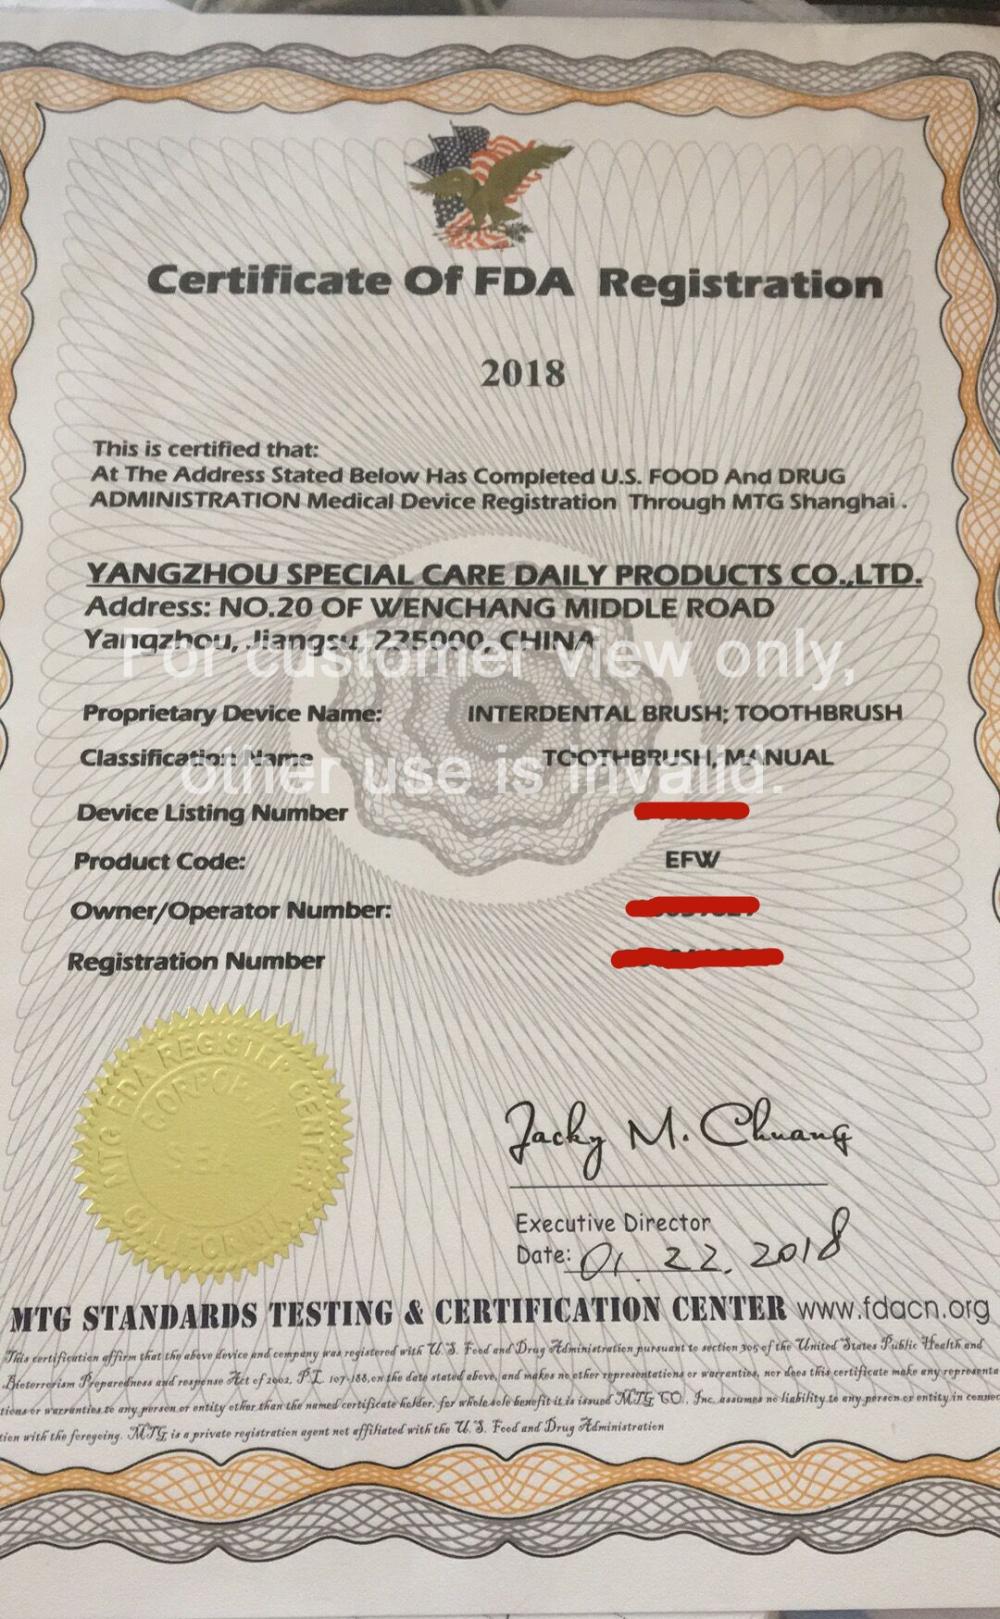 Certificate Of FDA Registration